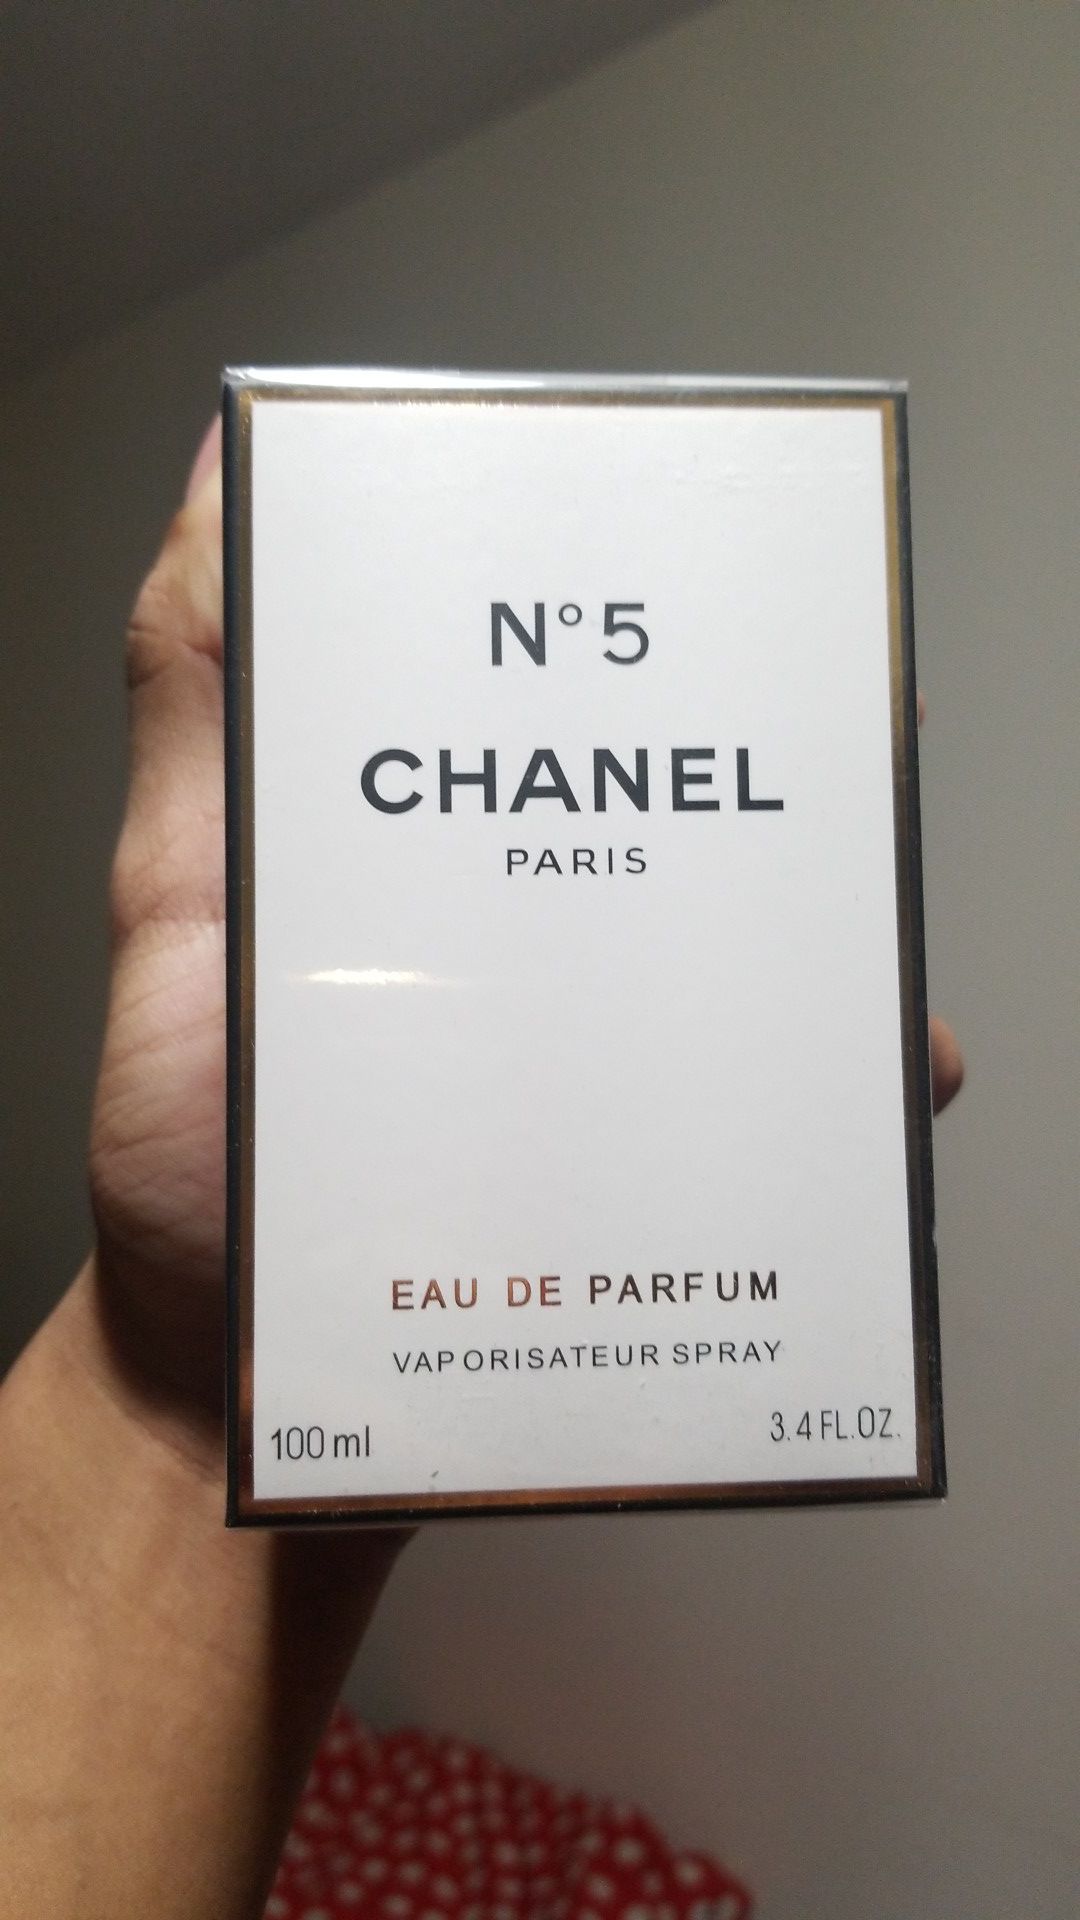 N°5 chanel perfume